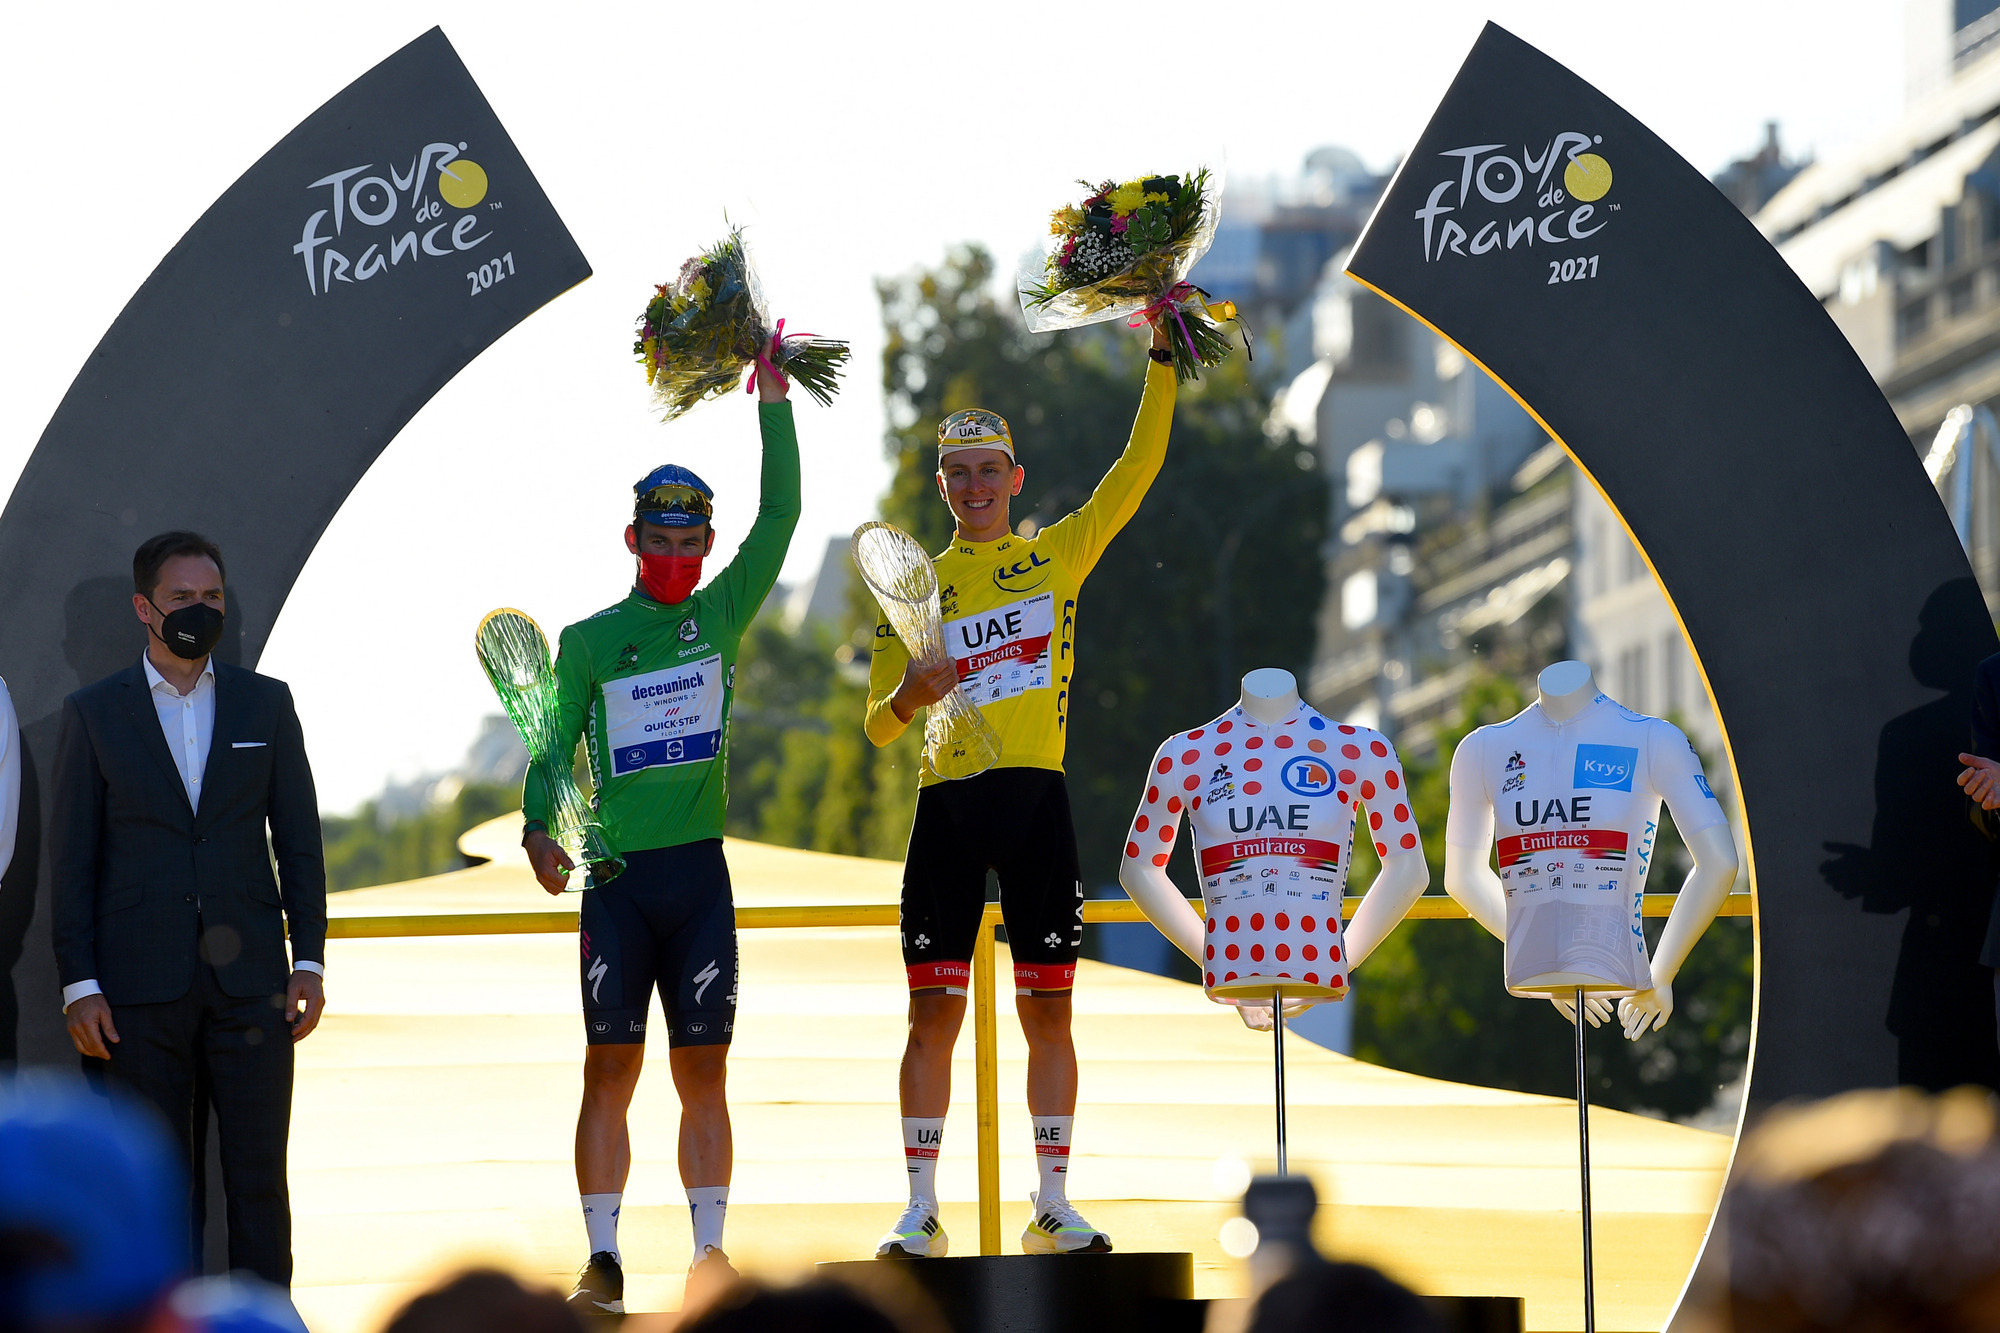 Tour de France: Standings at the 2021 race | Cyclingnews